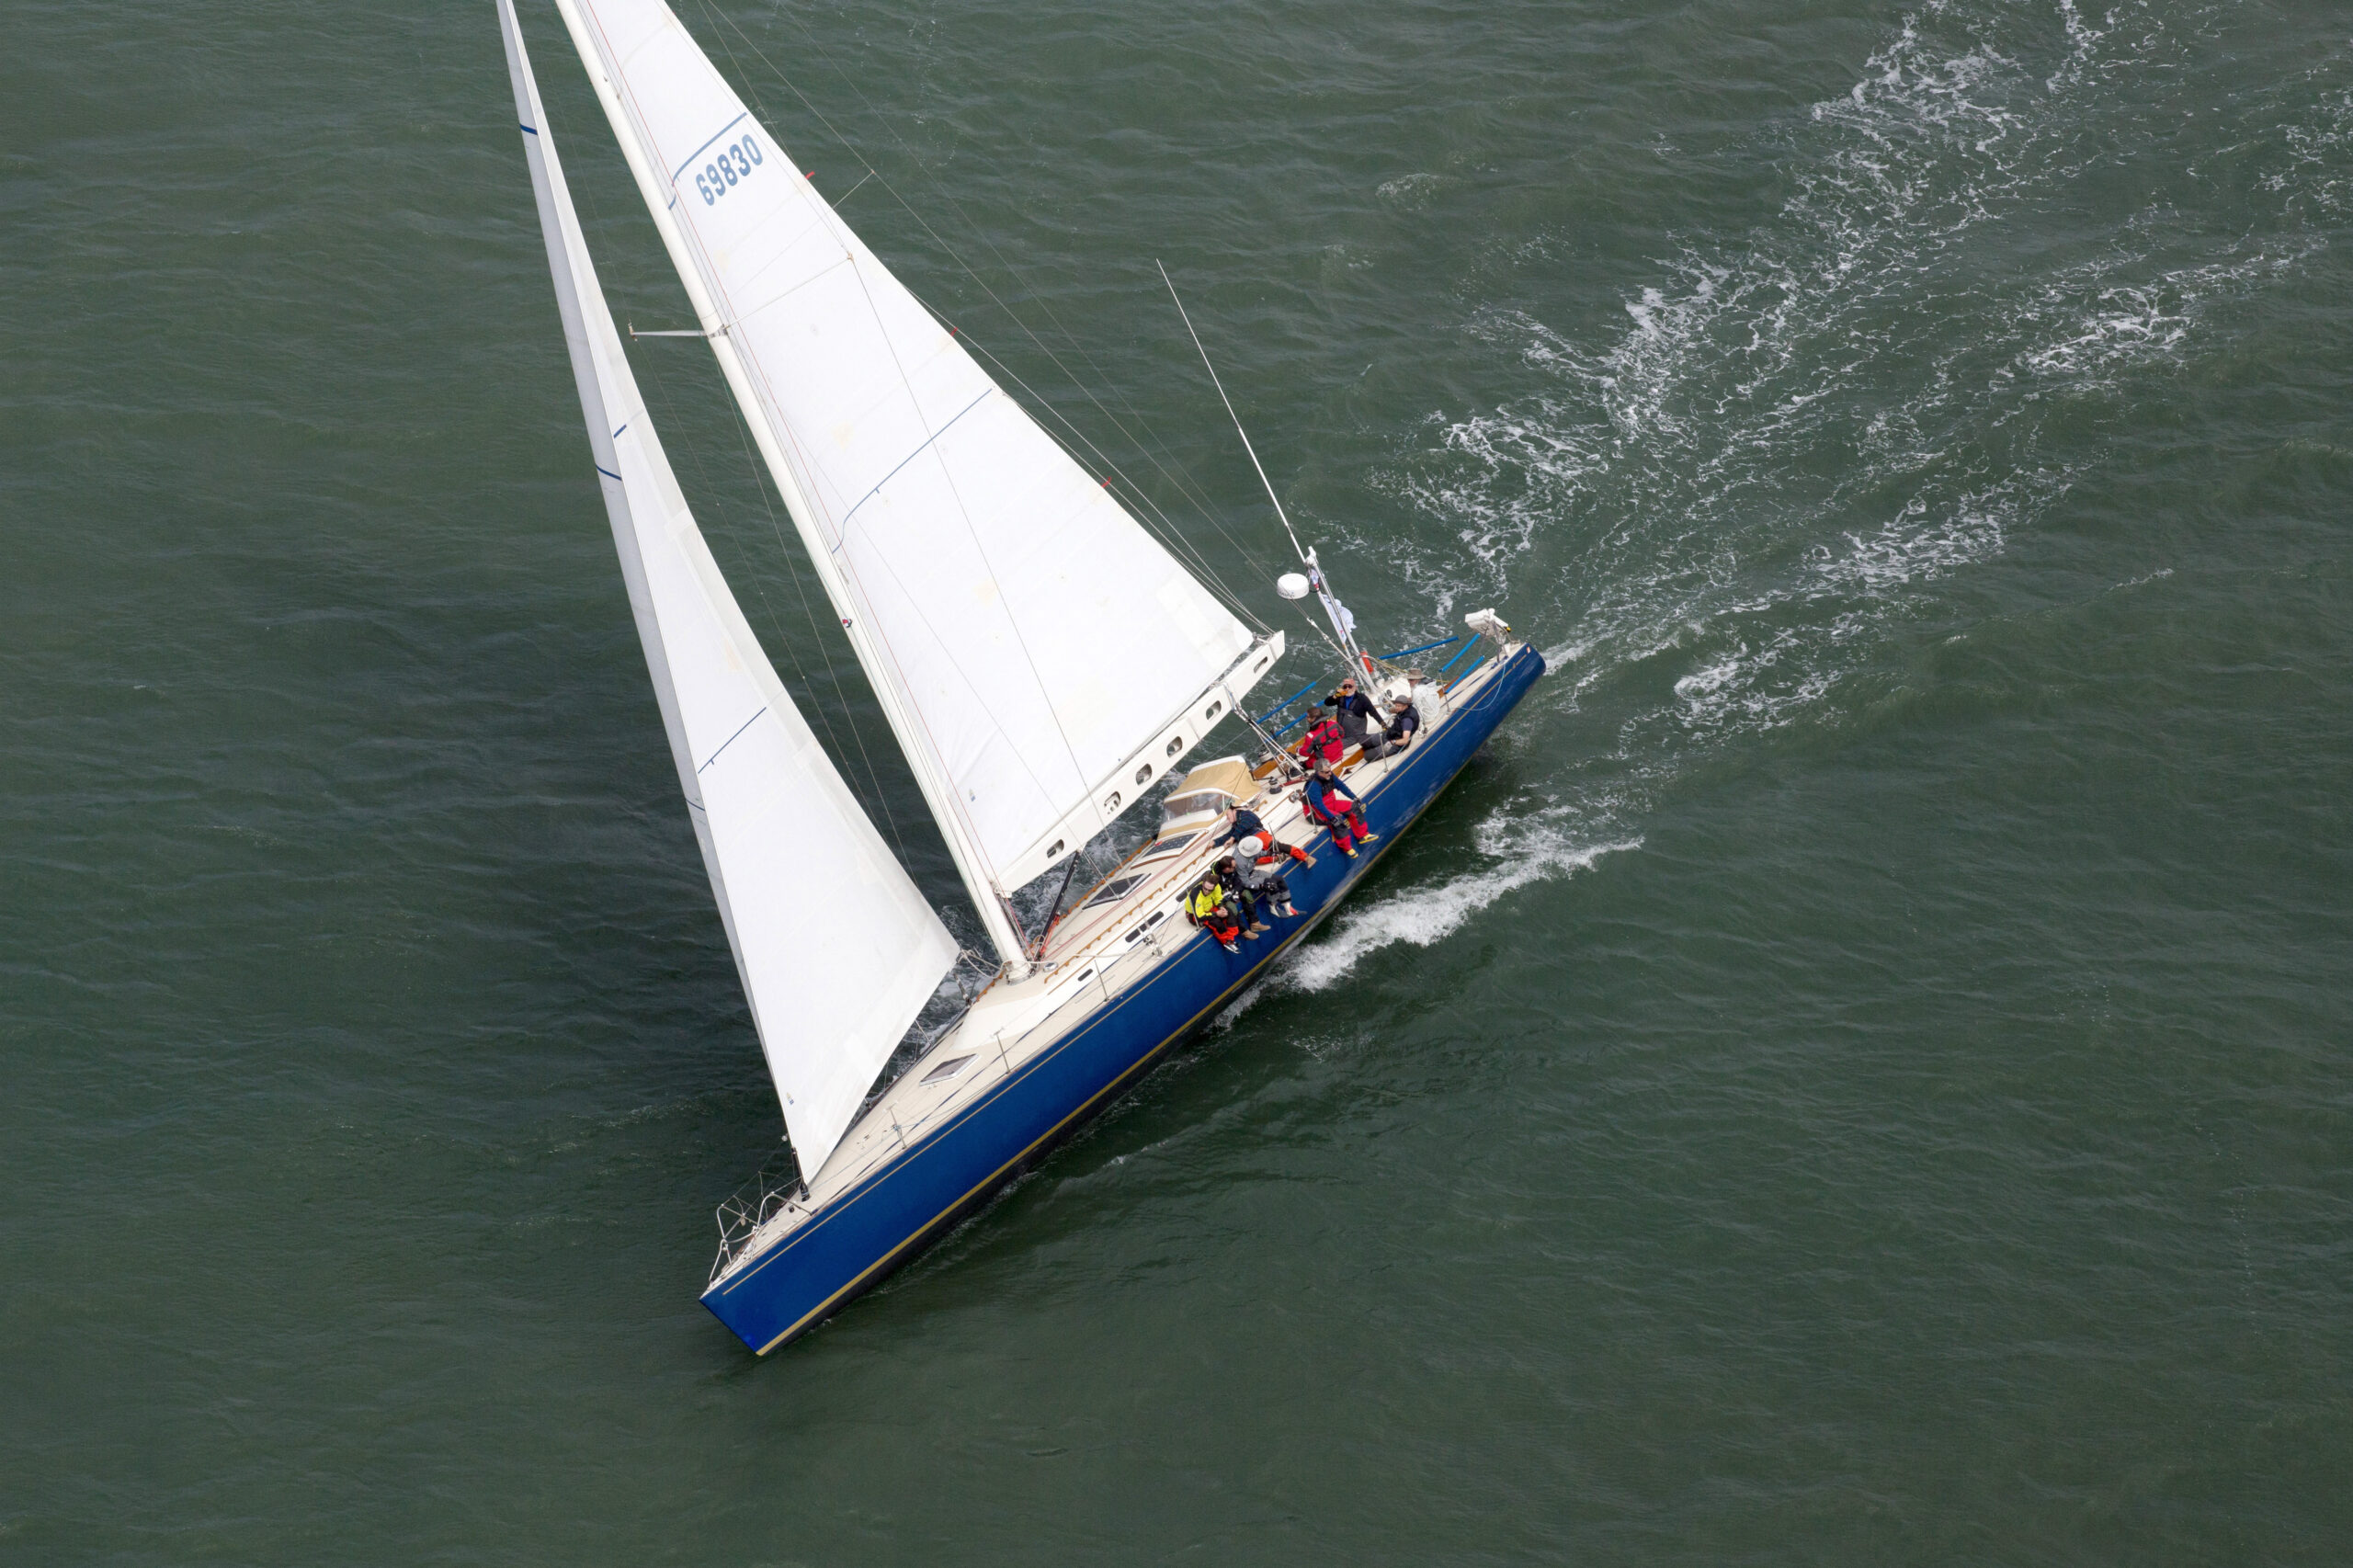 70 foot racing yacht